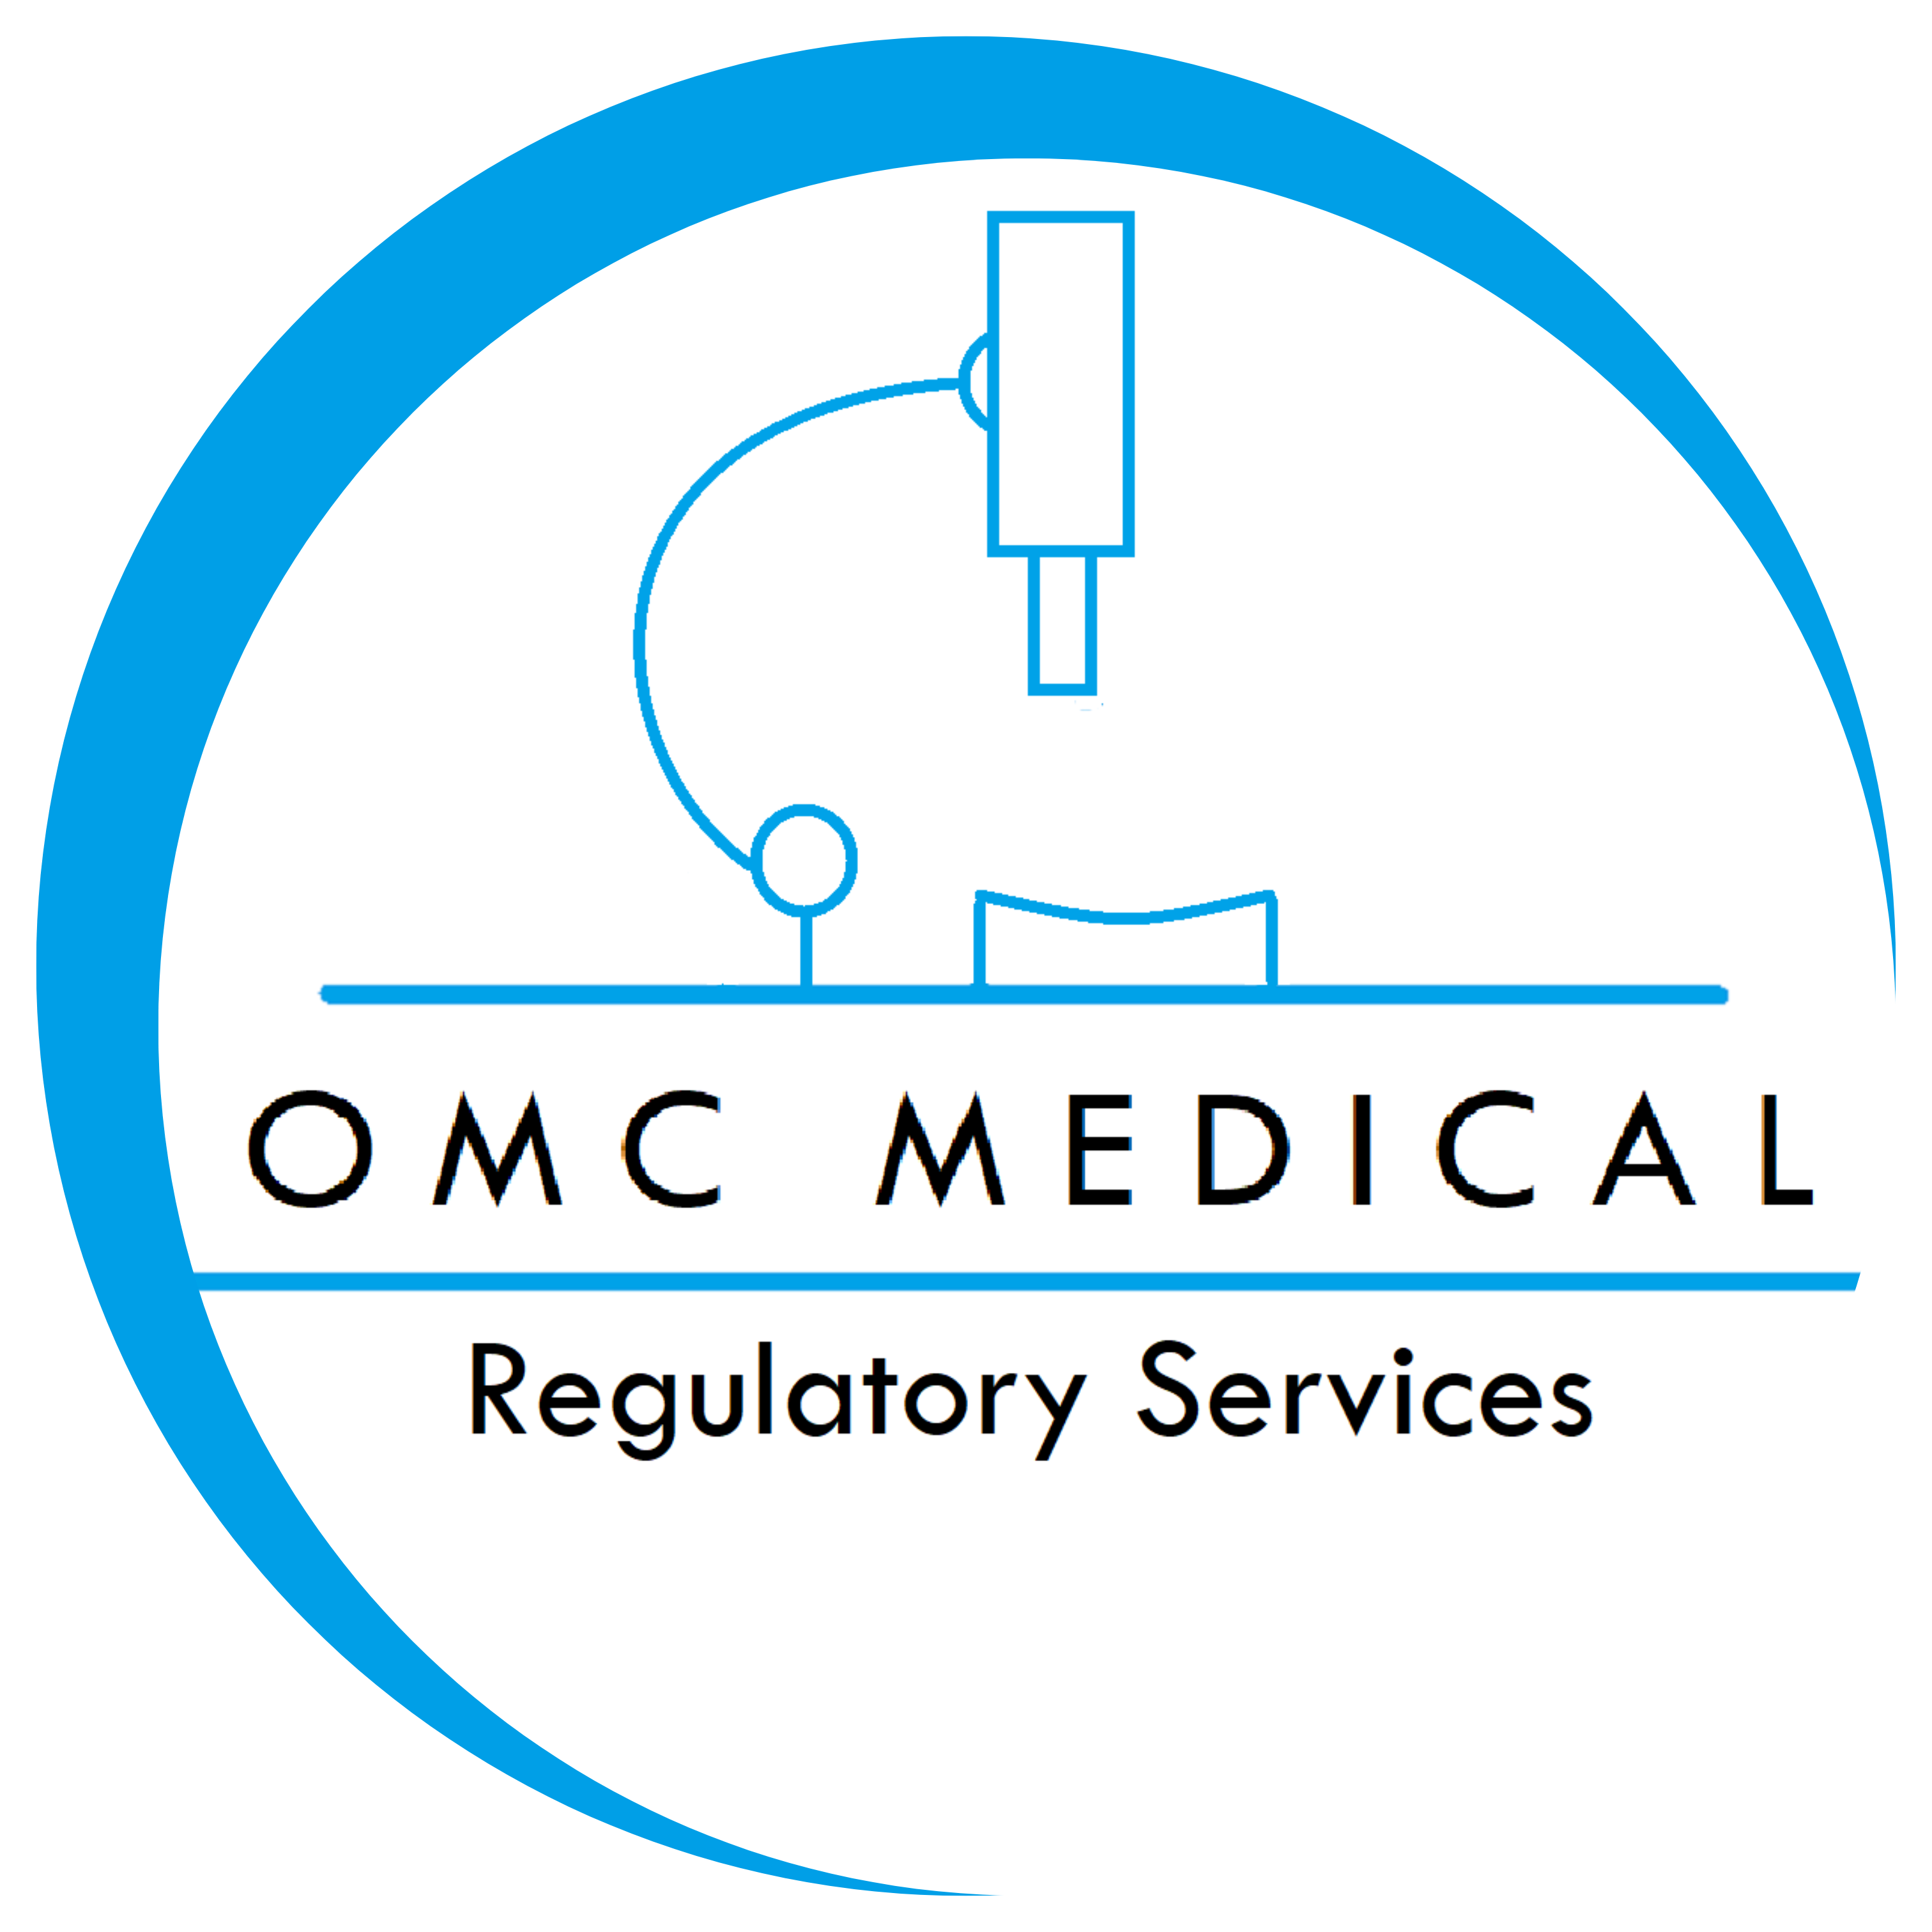 OMC Medical